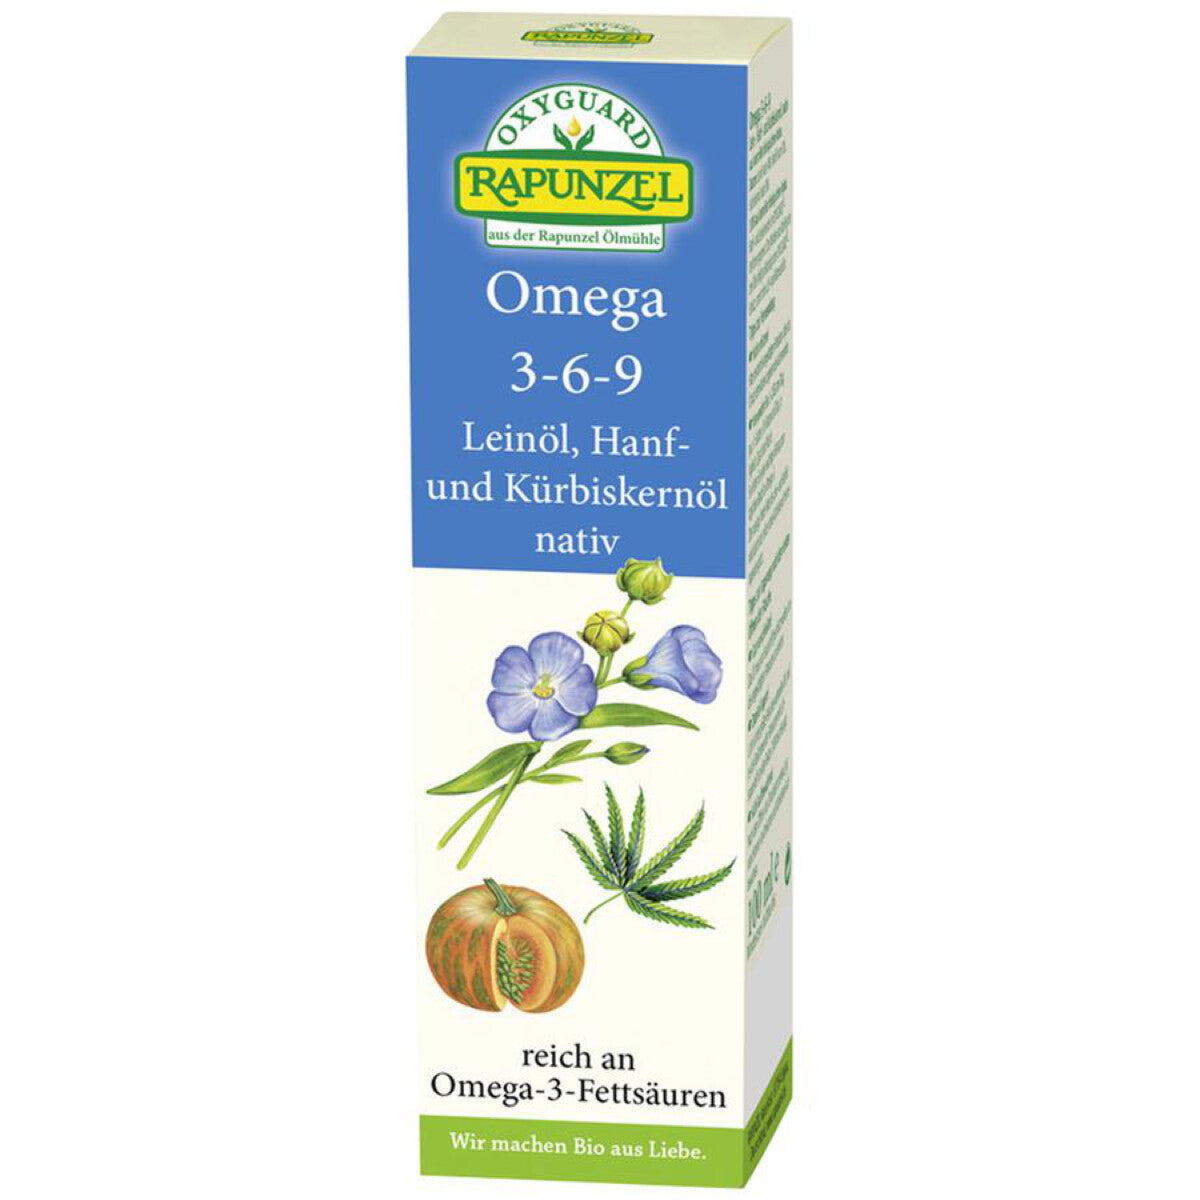 RAPUNZEL OXYGUARD Omega 3-6-9 - 100 ml 